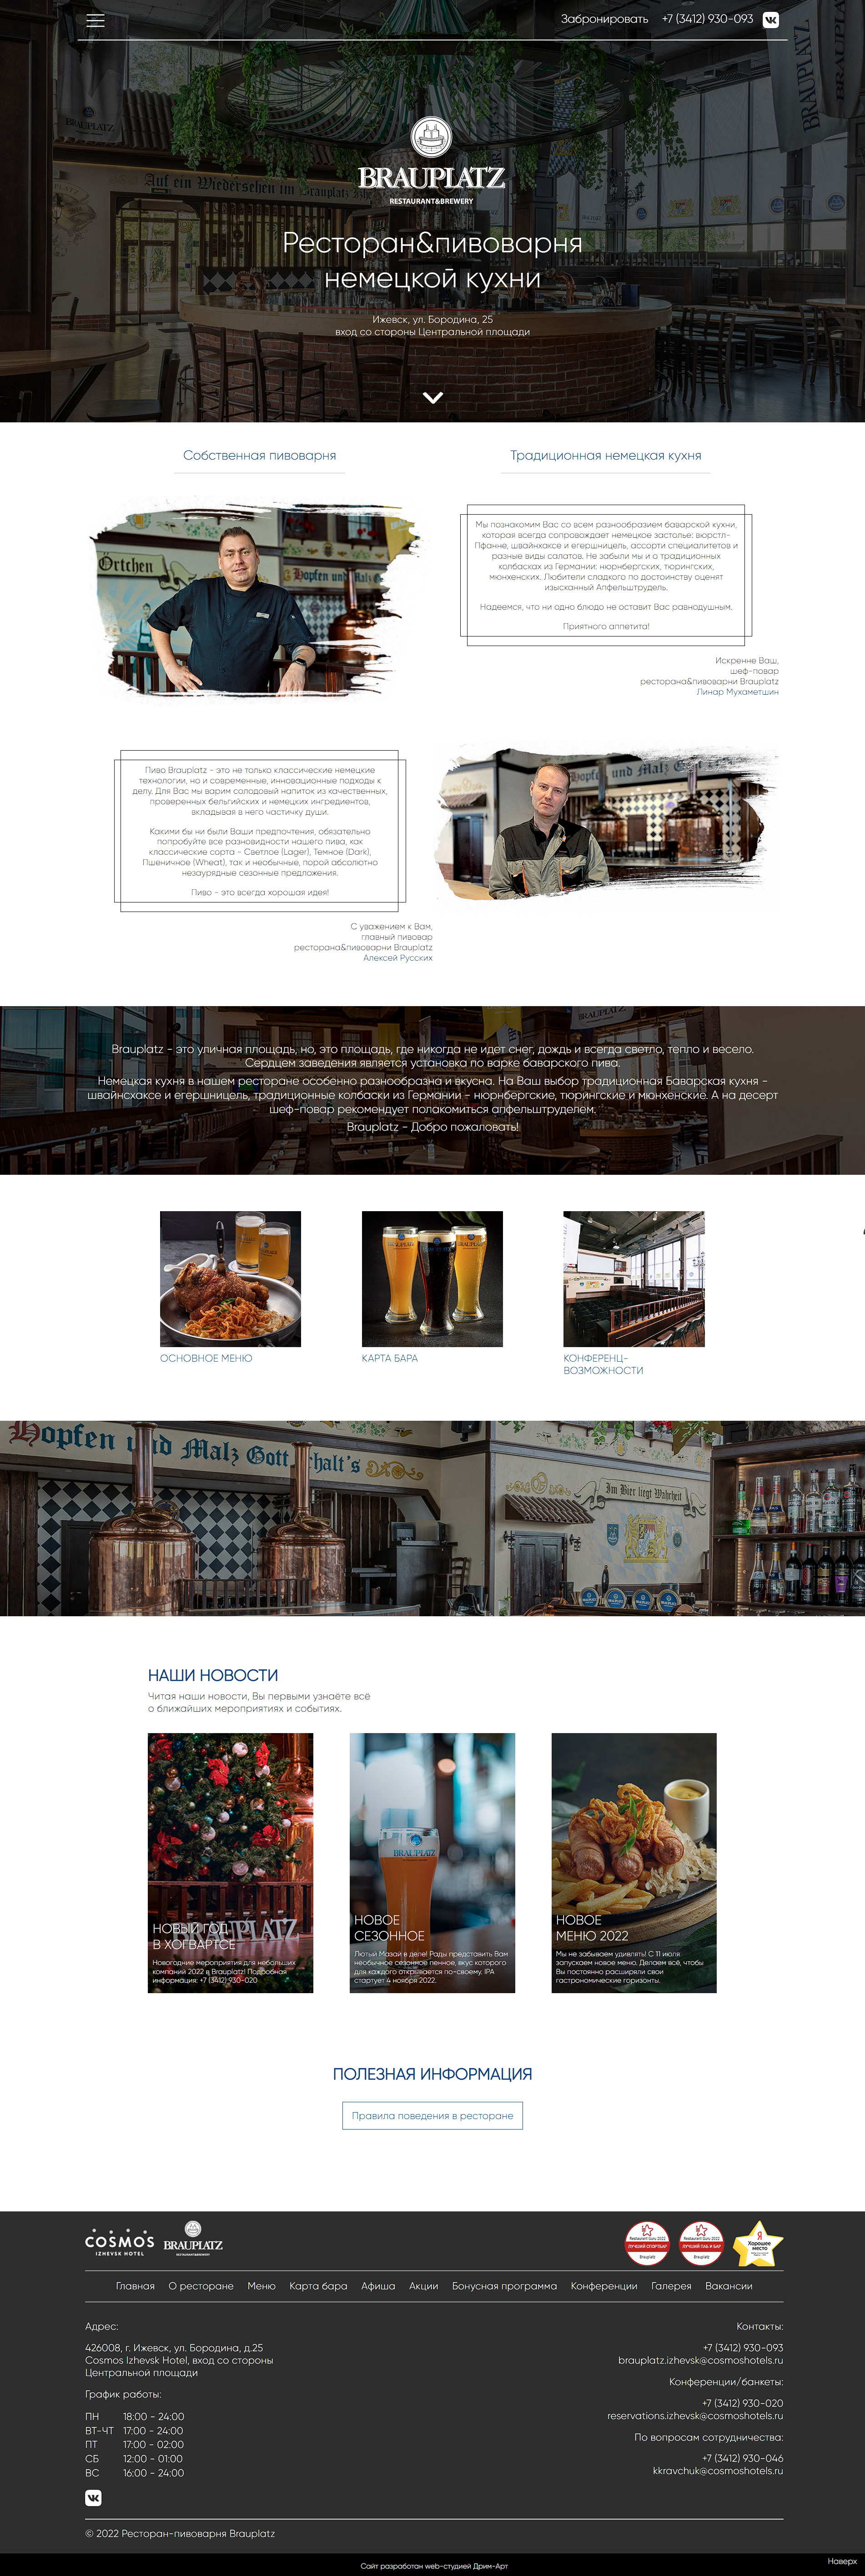 Сайт ресторана-пивоварни Brauplatz